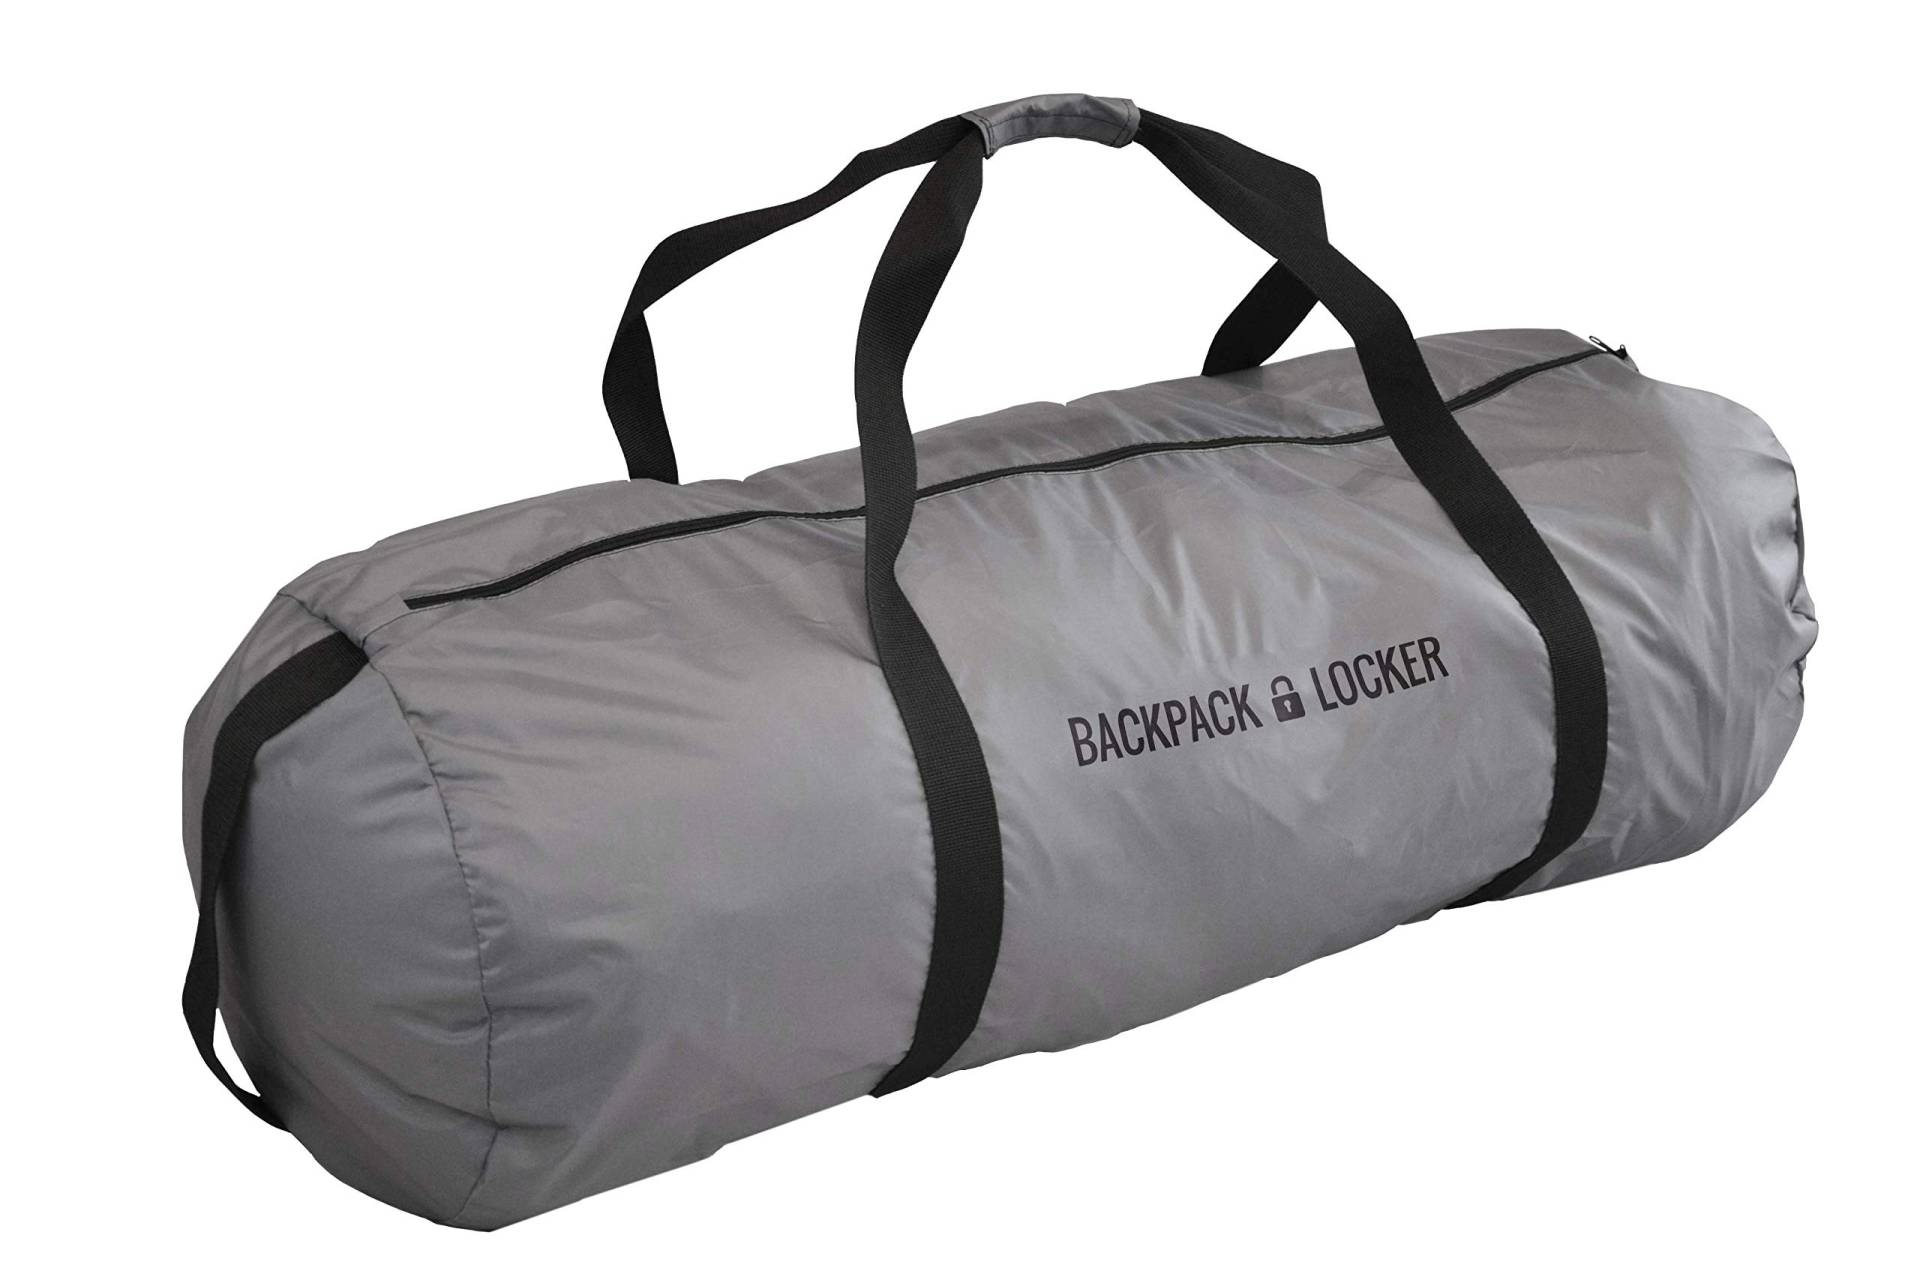 Backpack Locker - Dachbox Tasche - Große Schultertasche (65-180 Liter) (Hellgrau, 100 Liter) von Backpack Locker